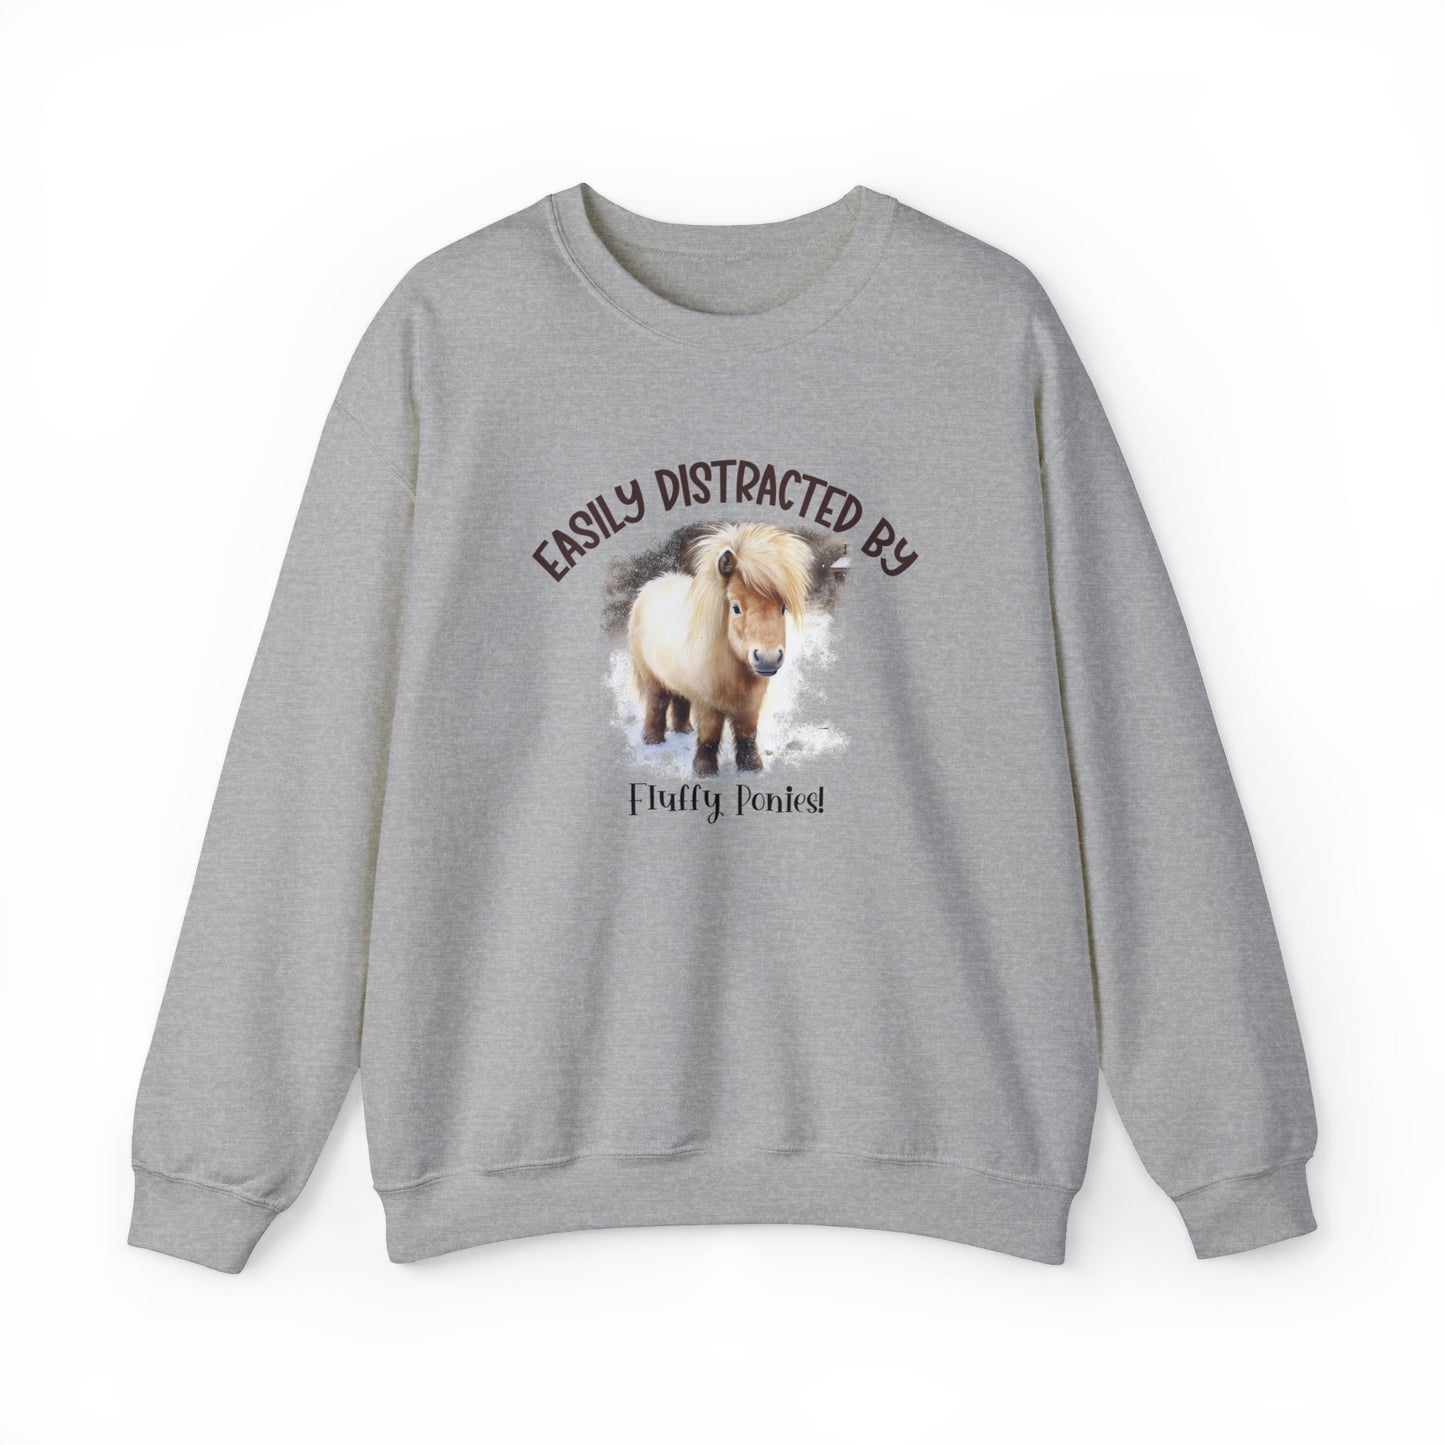 Horse Lovers Sweatshirt, Fluffy Ponies Cozy Comfy Sweatshirt Fall Winter - FlooredByArt